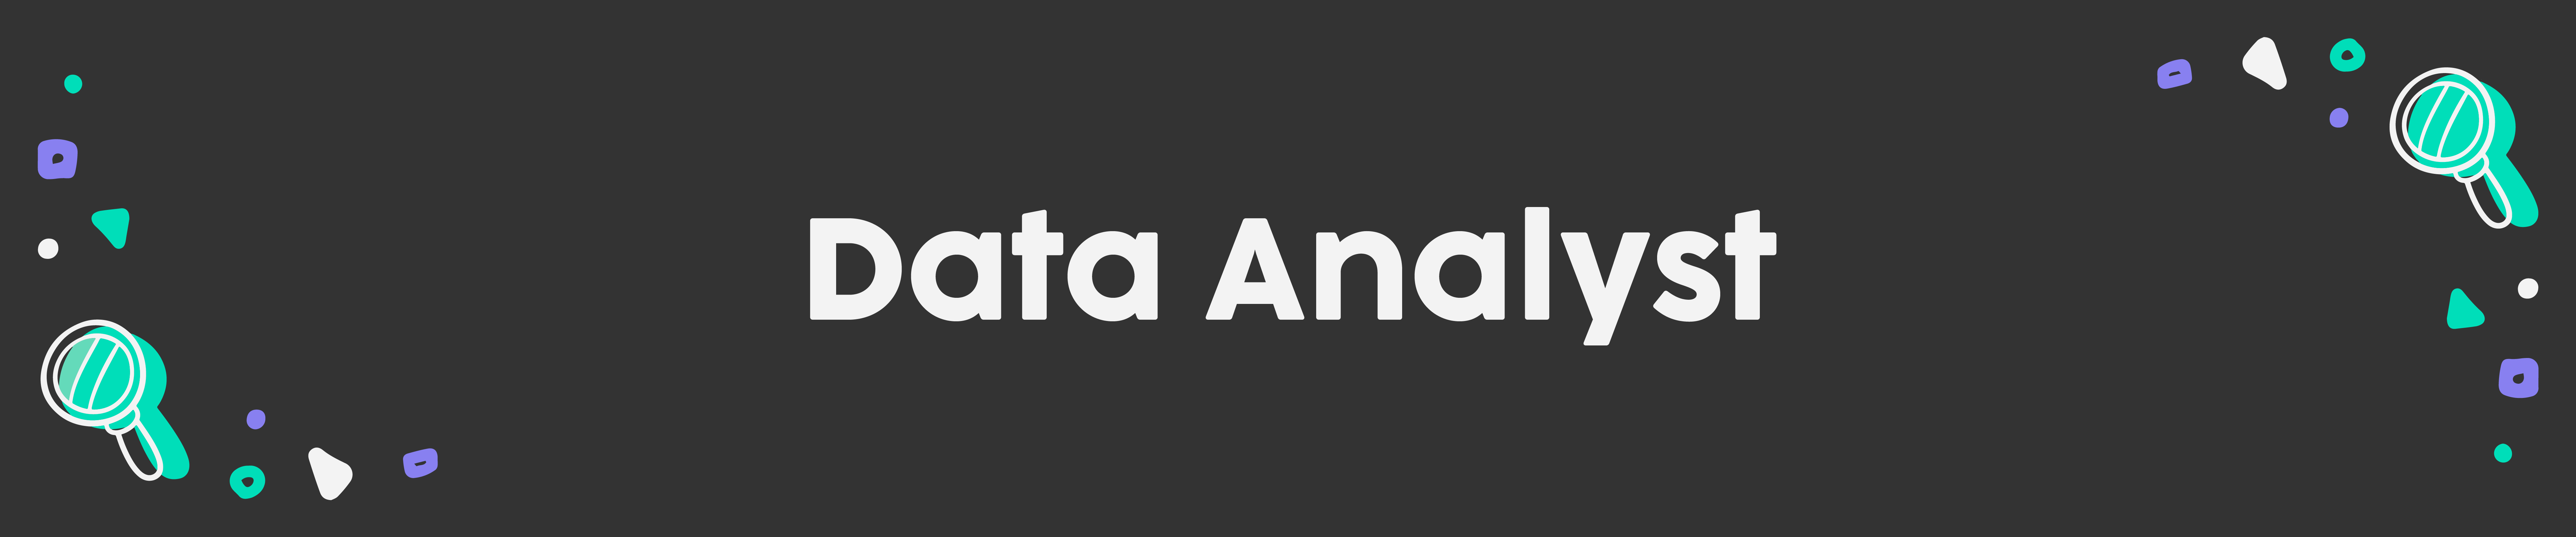 free data analyst online course